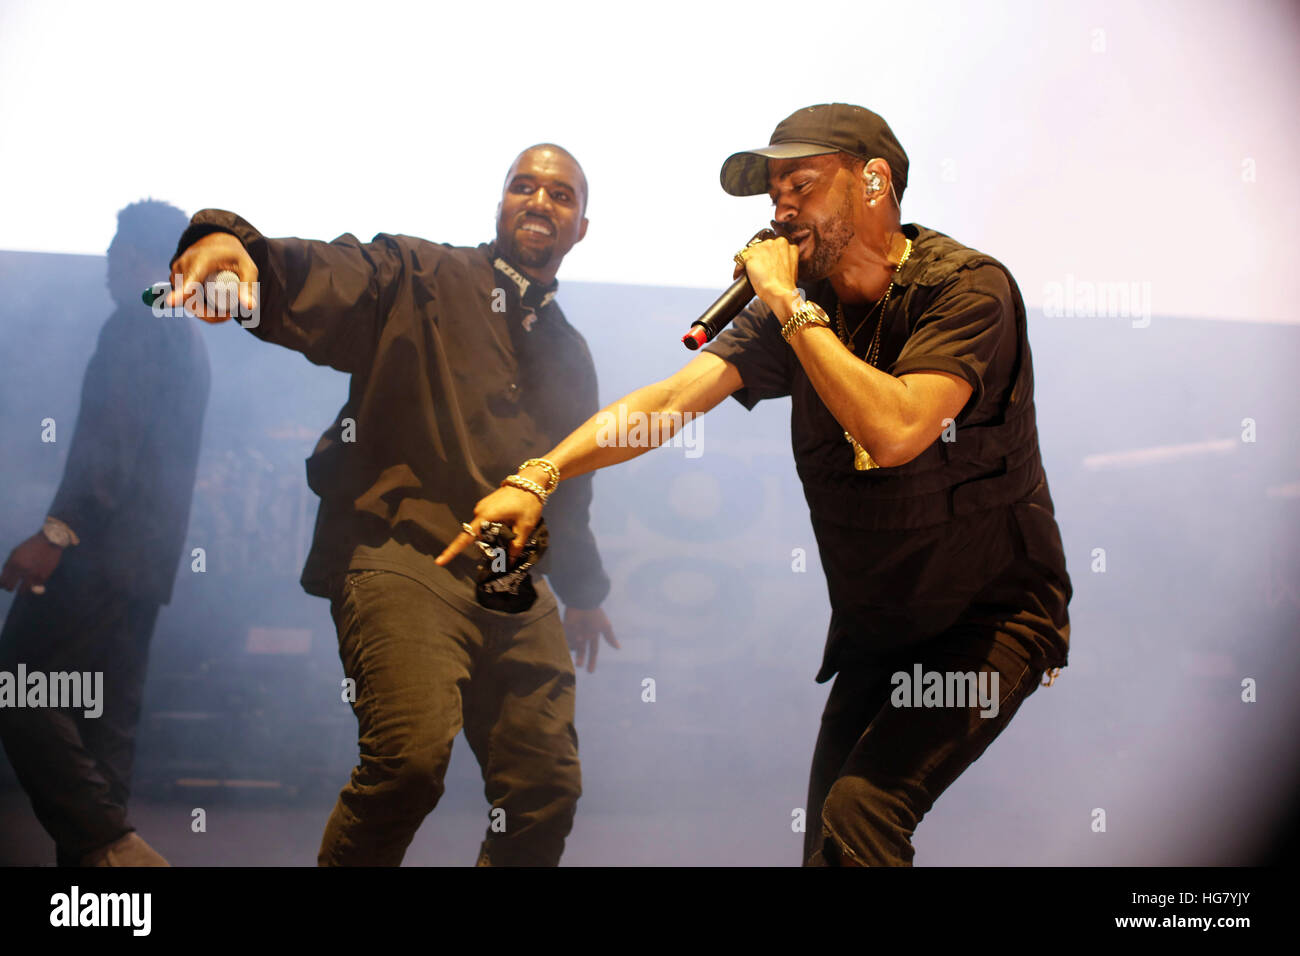 (L-R) Desiigner, Kanye West y Big sean de G.O.O.D Music realice en Hot 97 Summer Jam 2016 en el estadio Metlife en East Rutherford, Nueva Jersey. Foto de stock